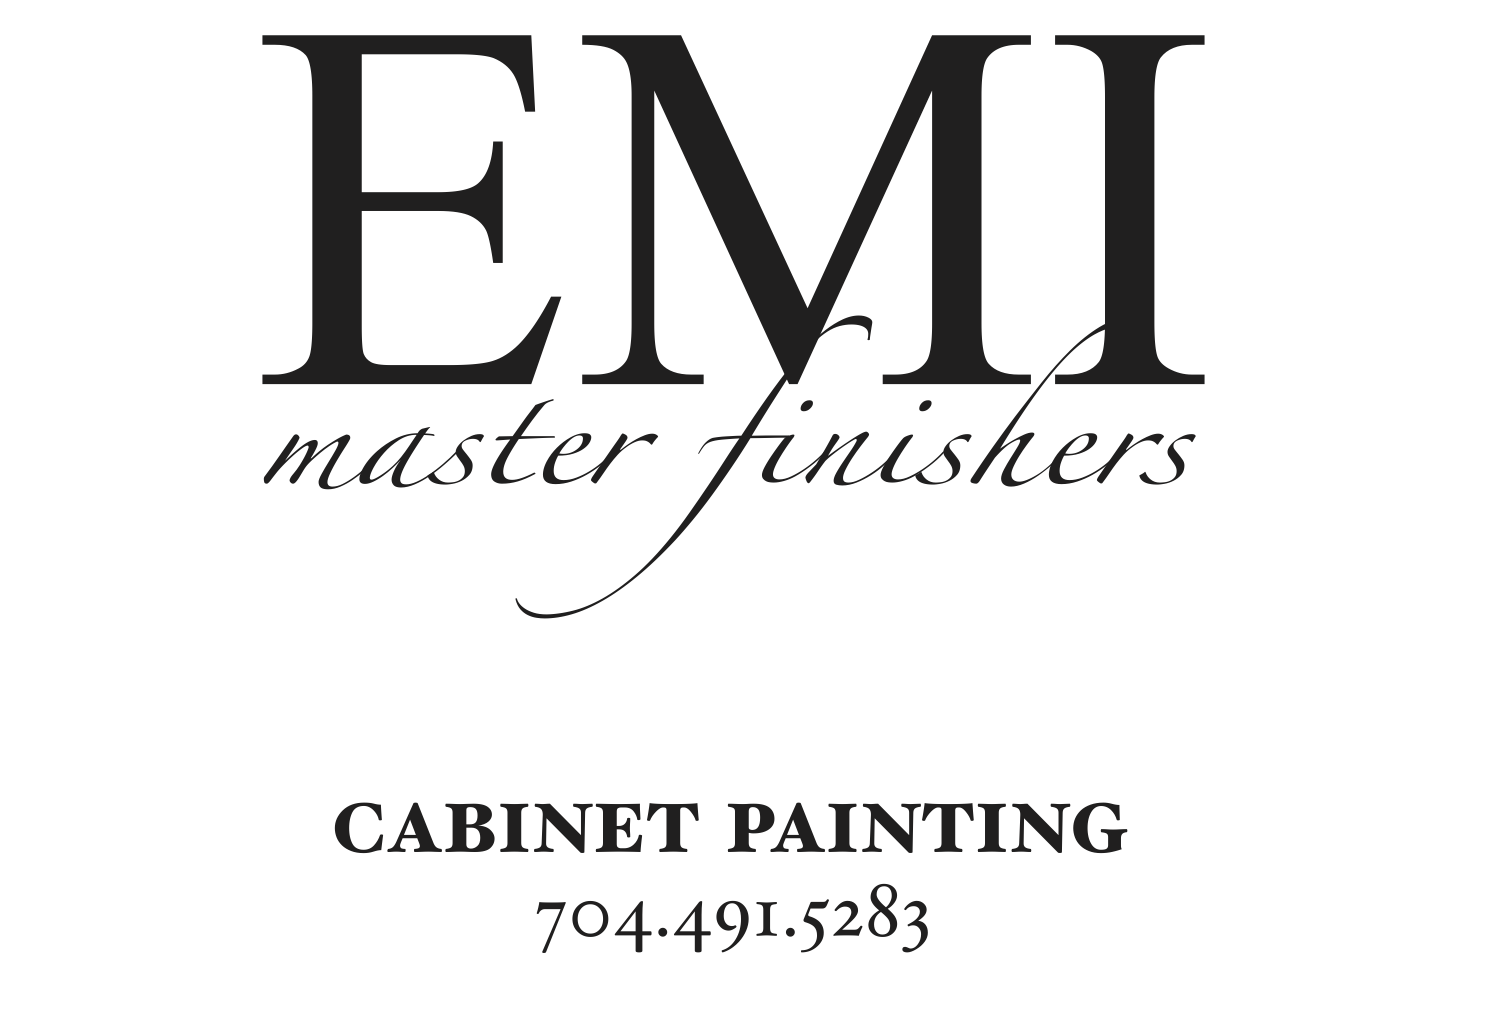 EMI Cabinet Painting